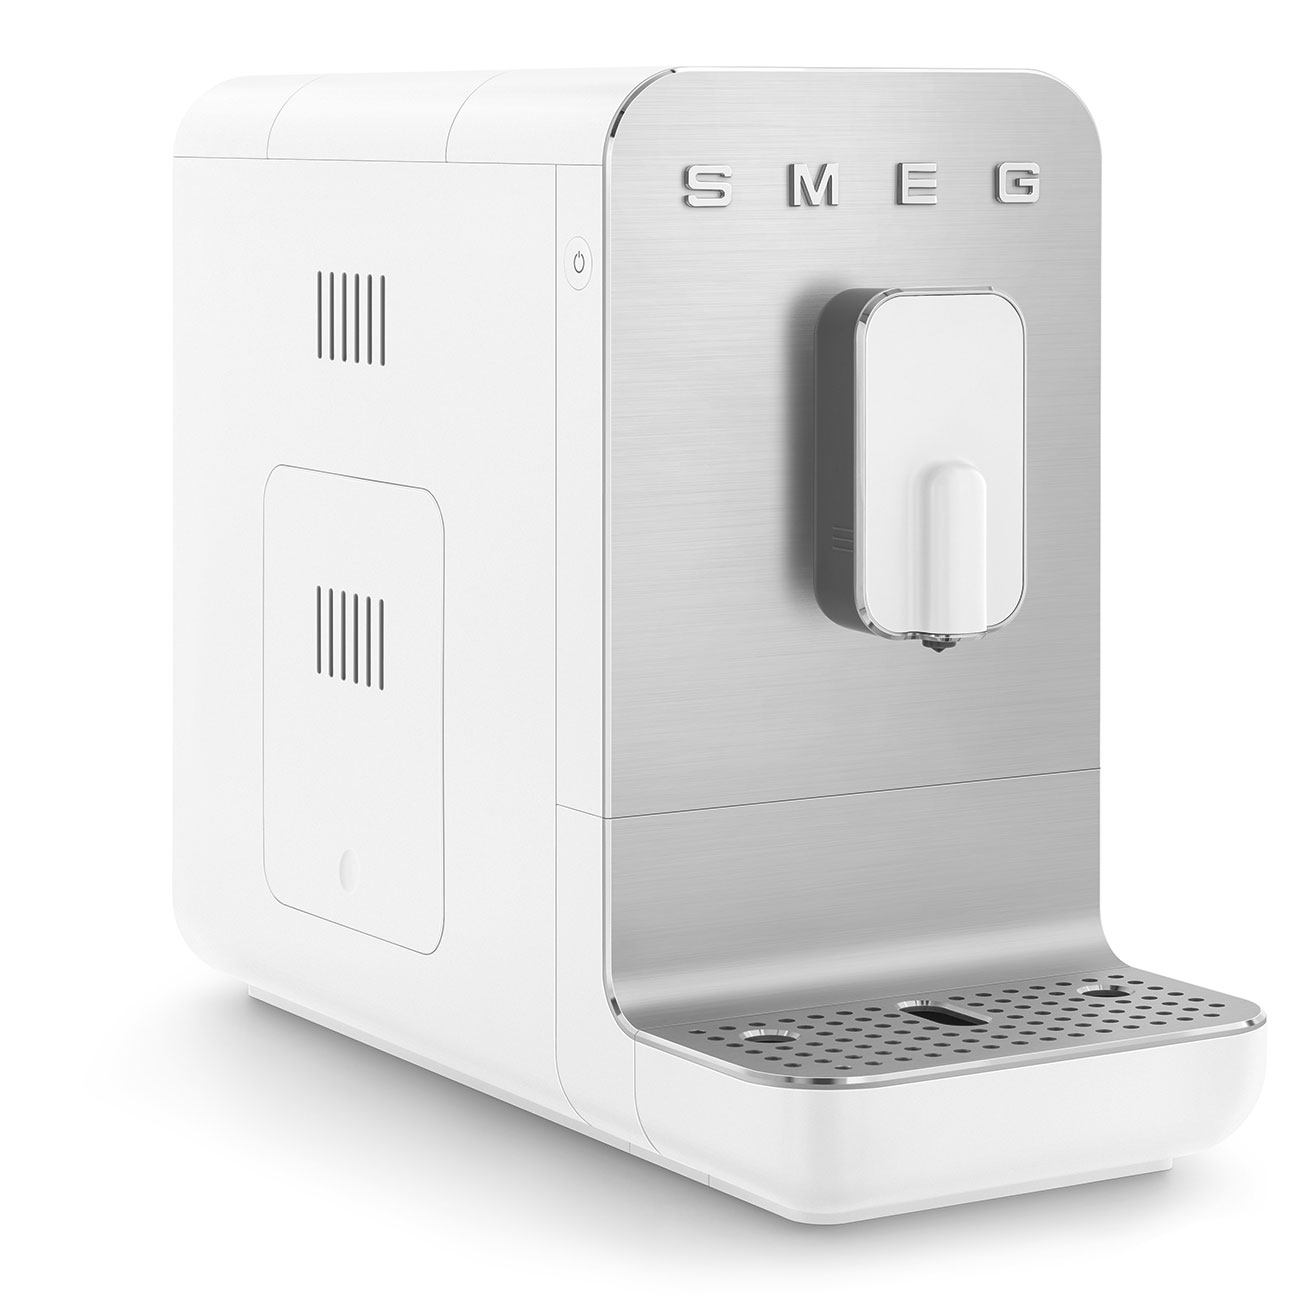 Smeg White Espresso Manual Coffee Machine_5